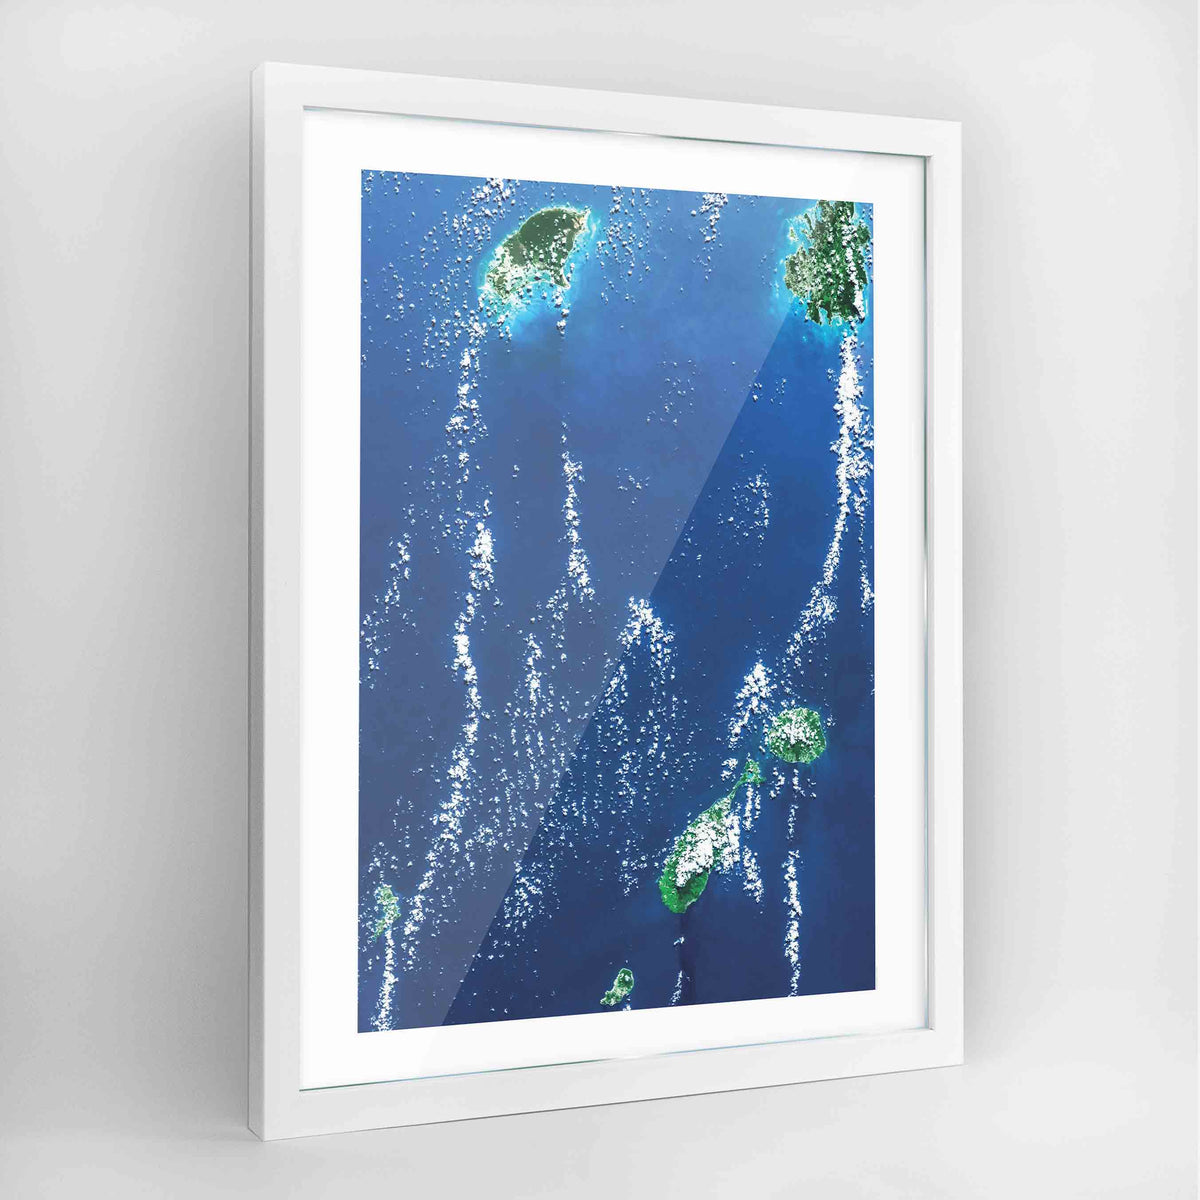 Leeward Islands Earth Photography Art Print - Framed